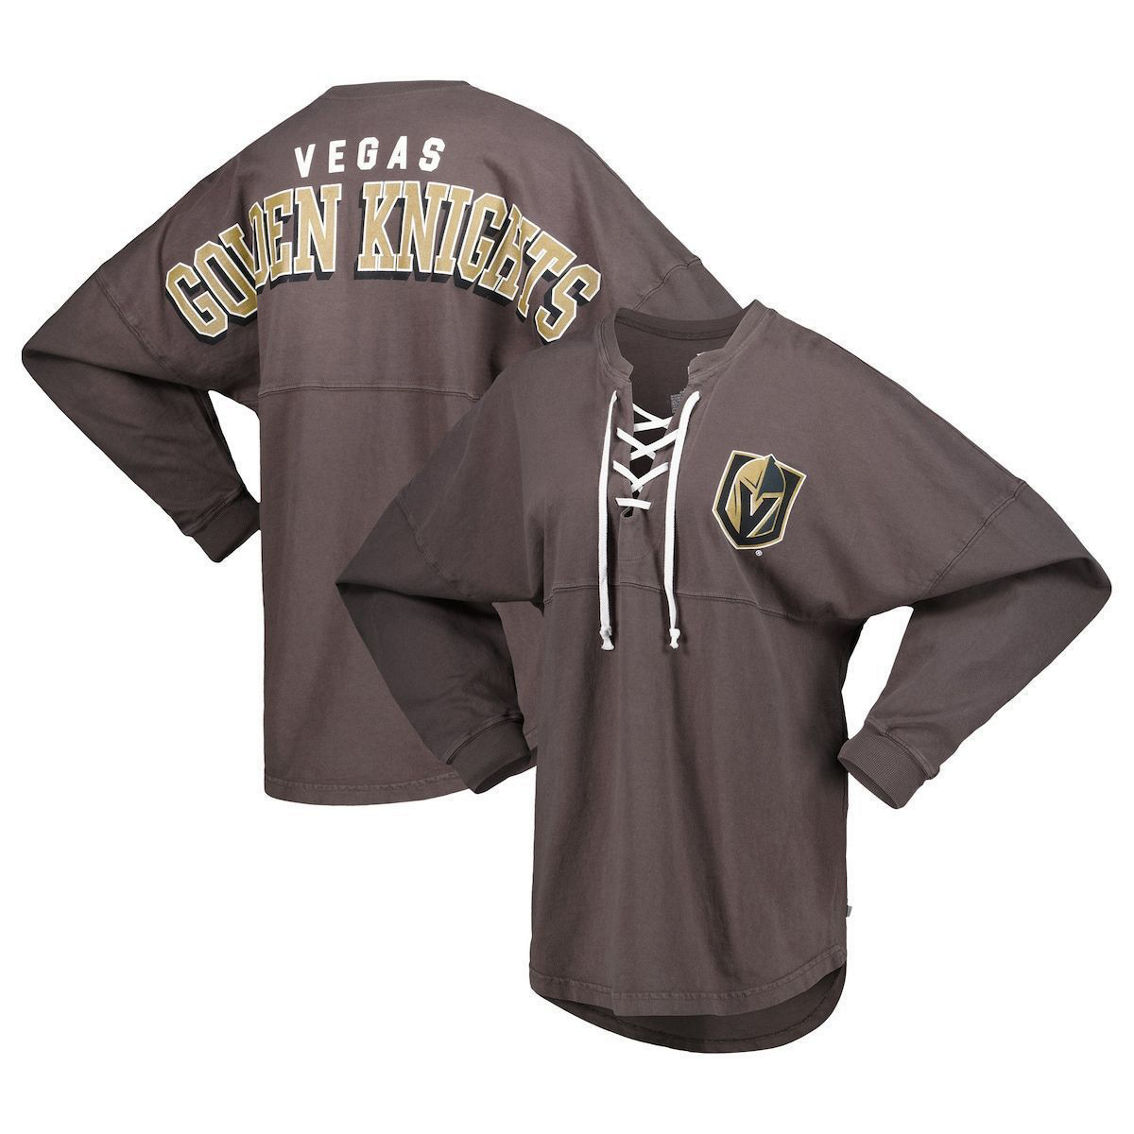 Fanatics Branded Women's Charcoal Vegas Golden Knights Spirit Lace-Up V-Neck Long Sleeve Jersey T-Shirt - Image 2 of 4